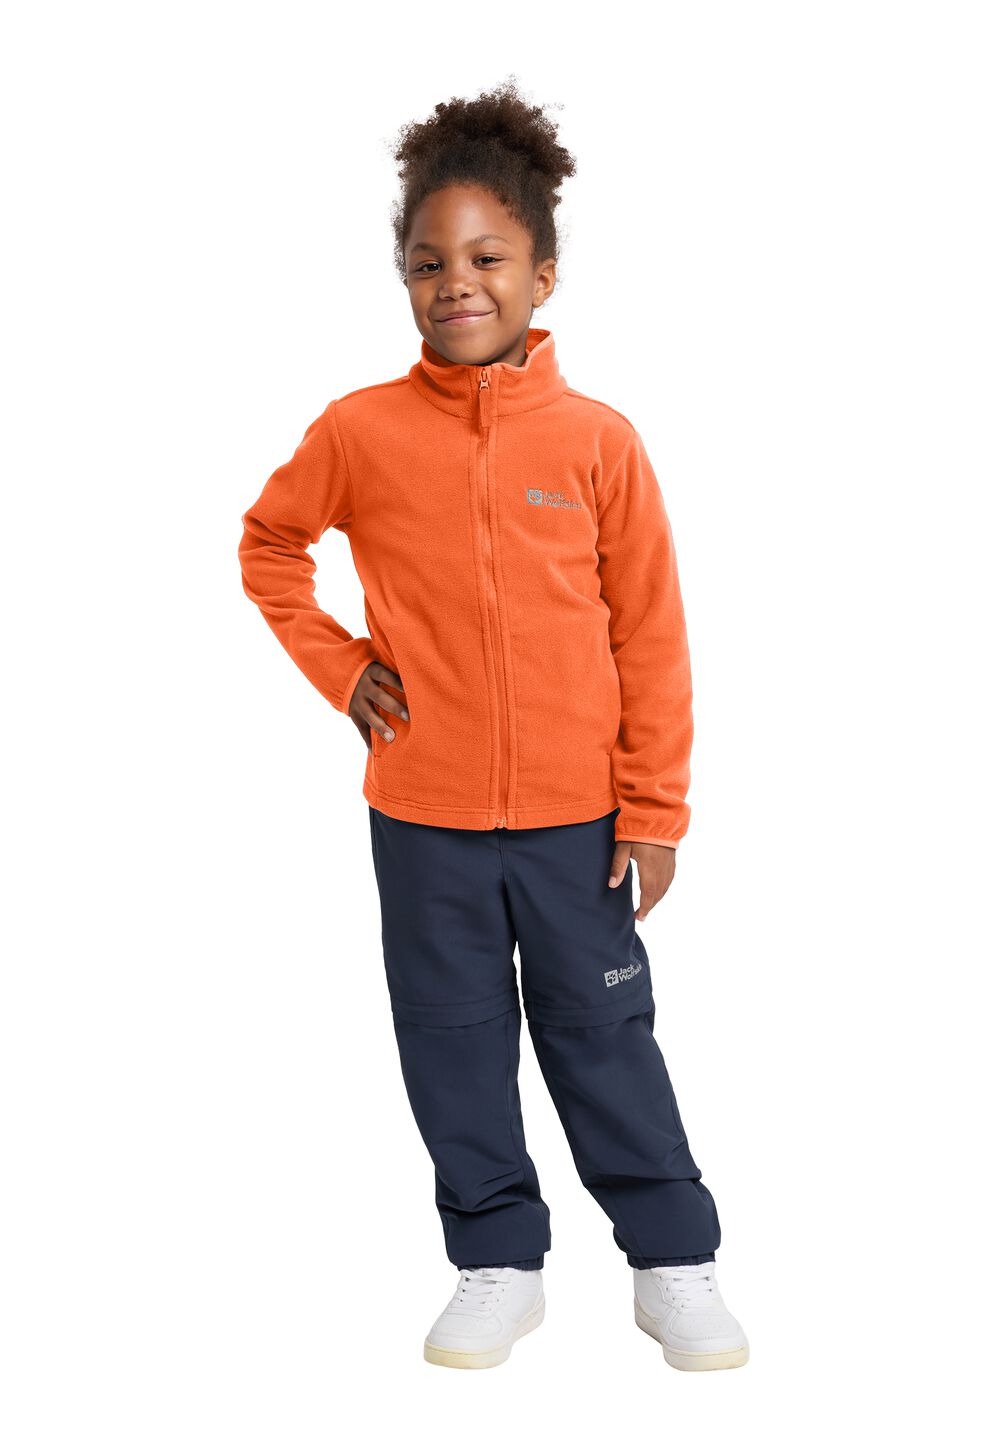 Jack Wolfskin Taunus Jacket Kids Fleece jack Kinderen 104 rood digital orange